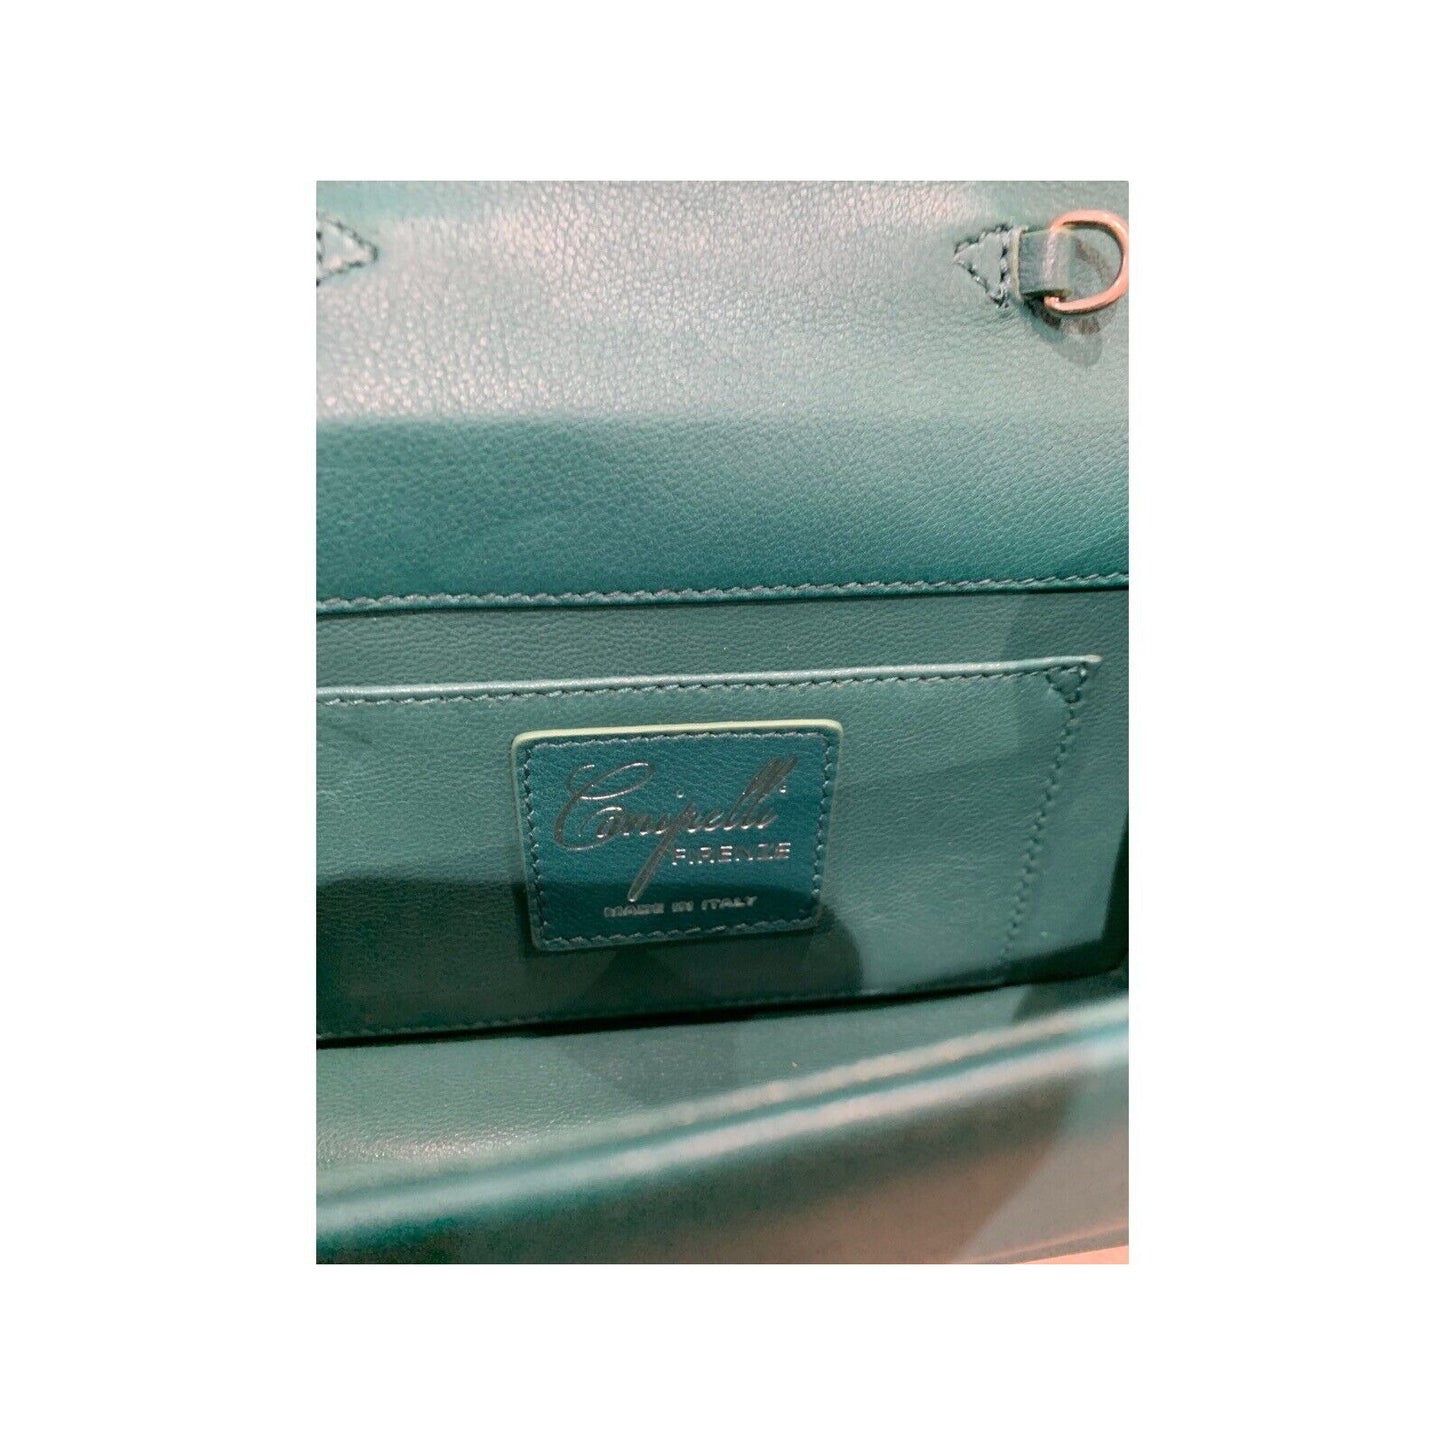 Canipelli Firenze Nappa Leather Jenny Clutch/Shoulder Bag